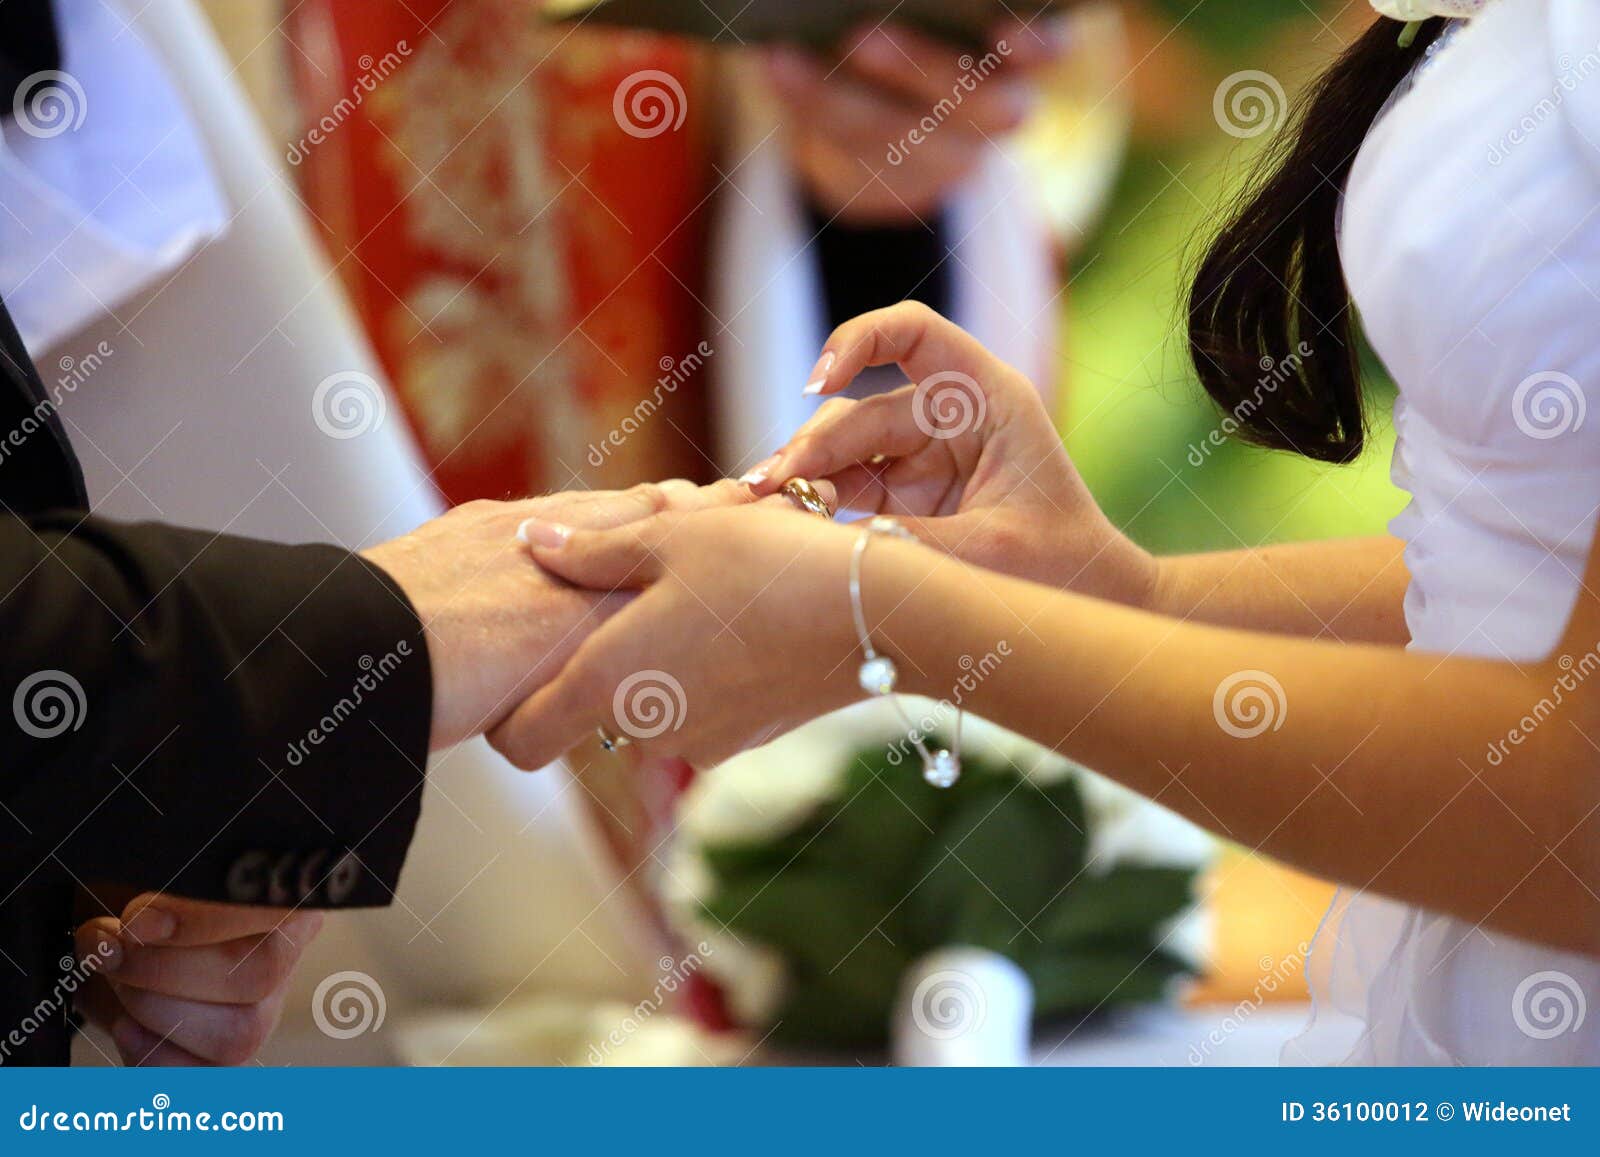 Catholic priest wedding ring